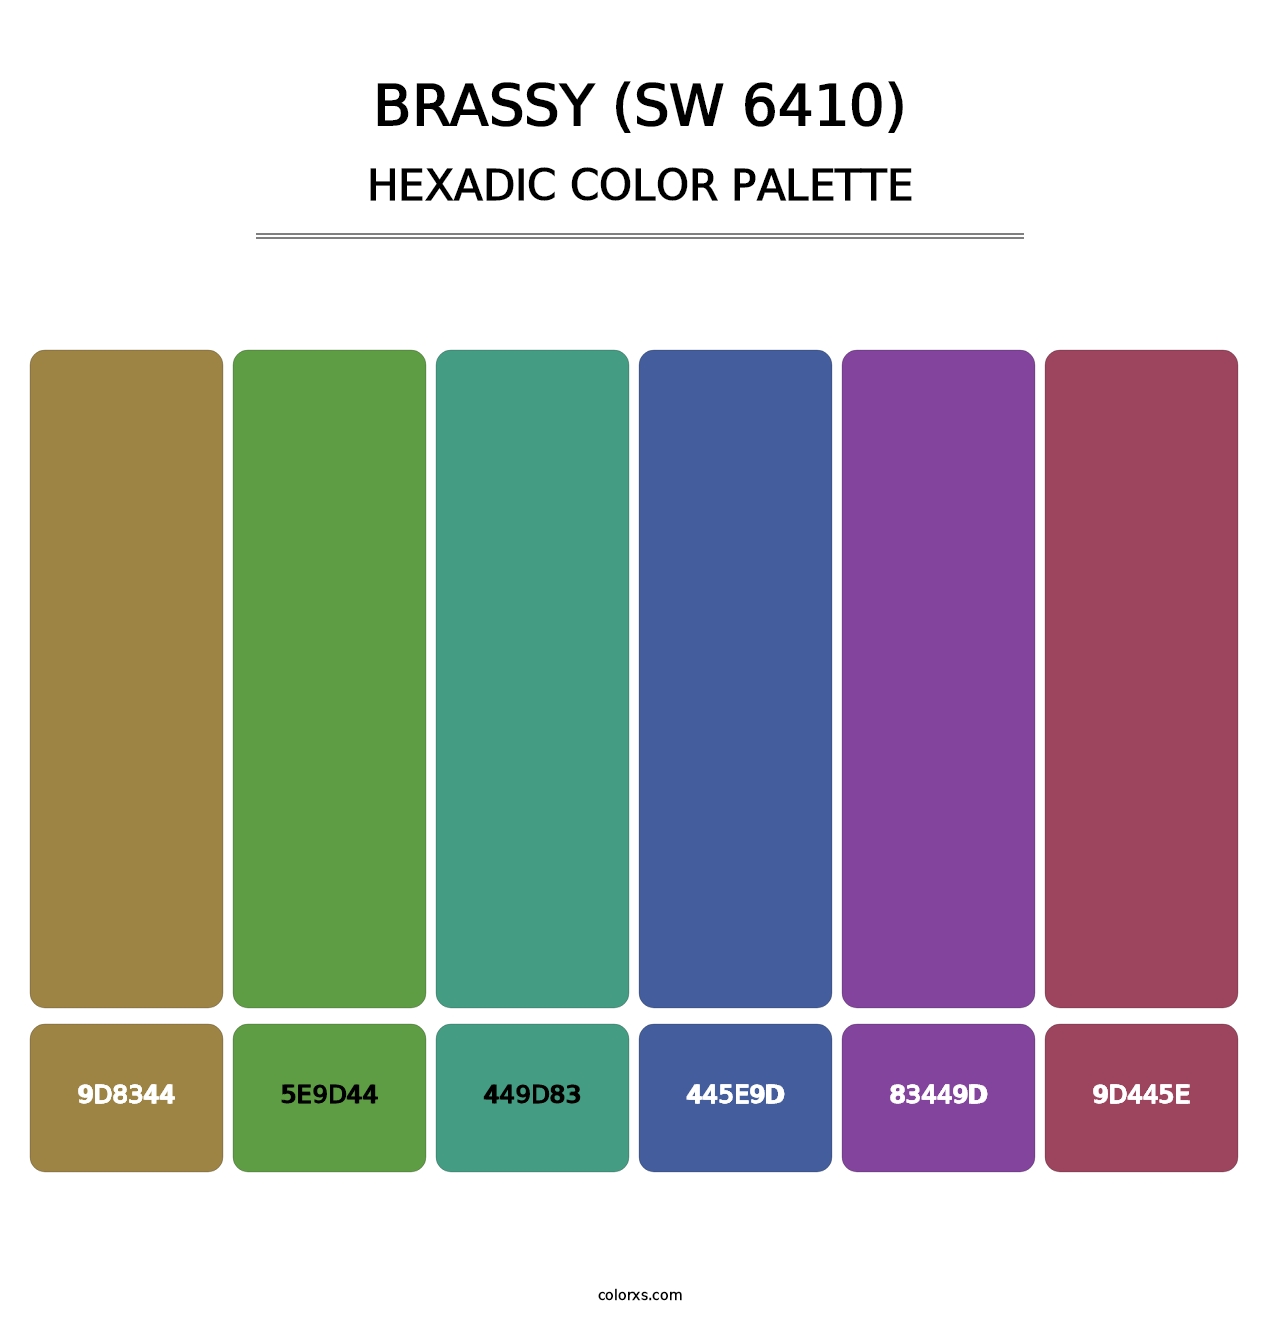 Brassy (SW 6410) - Hexadic Color Palette